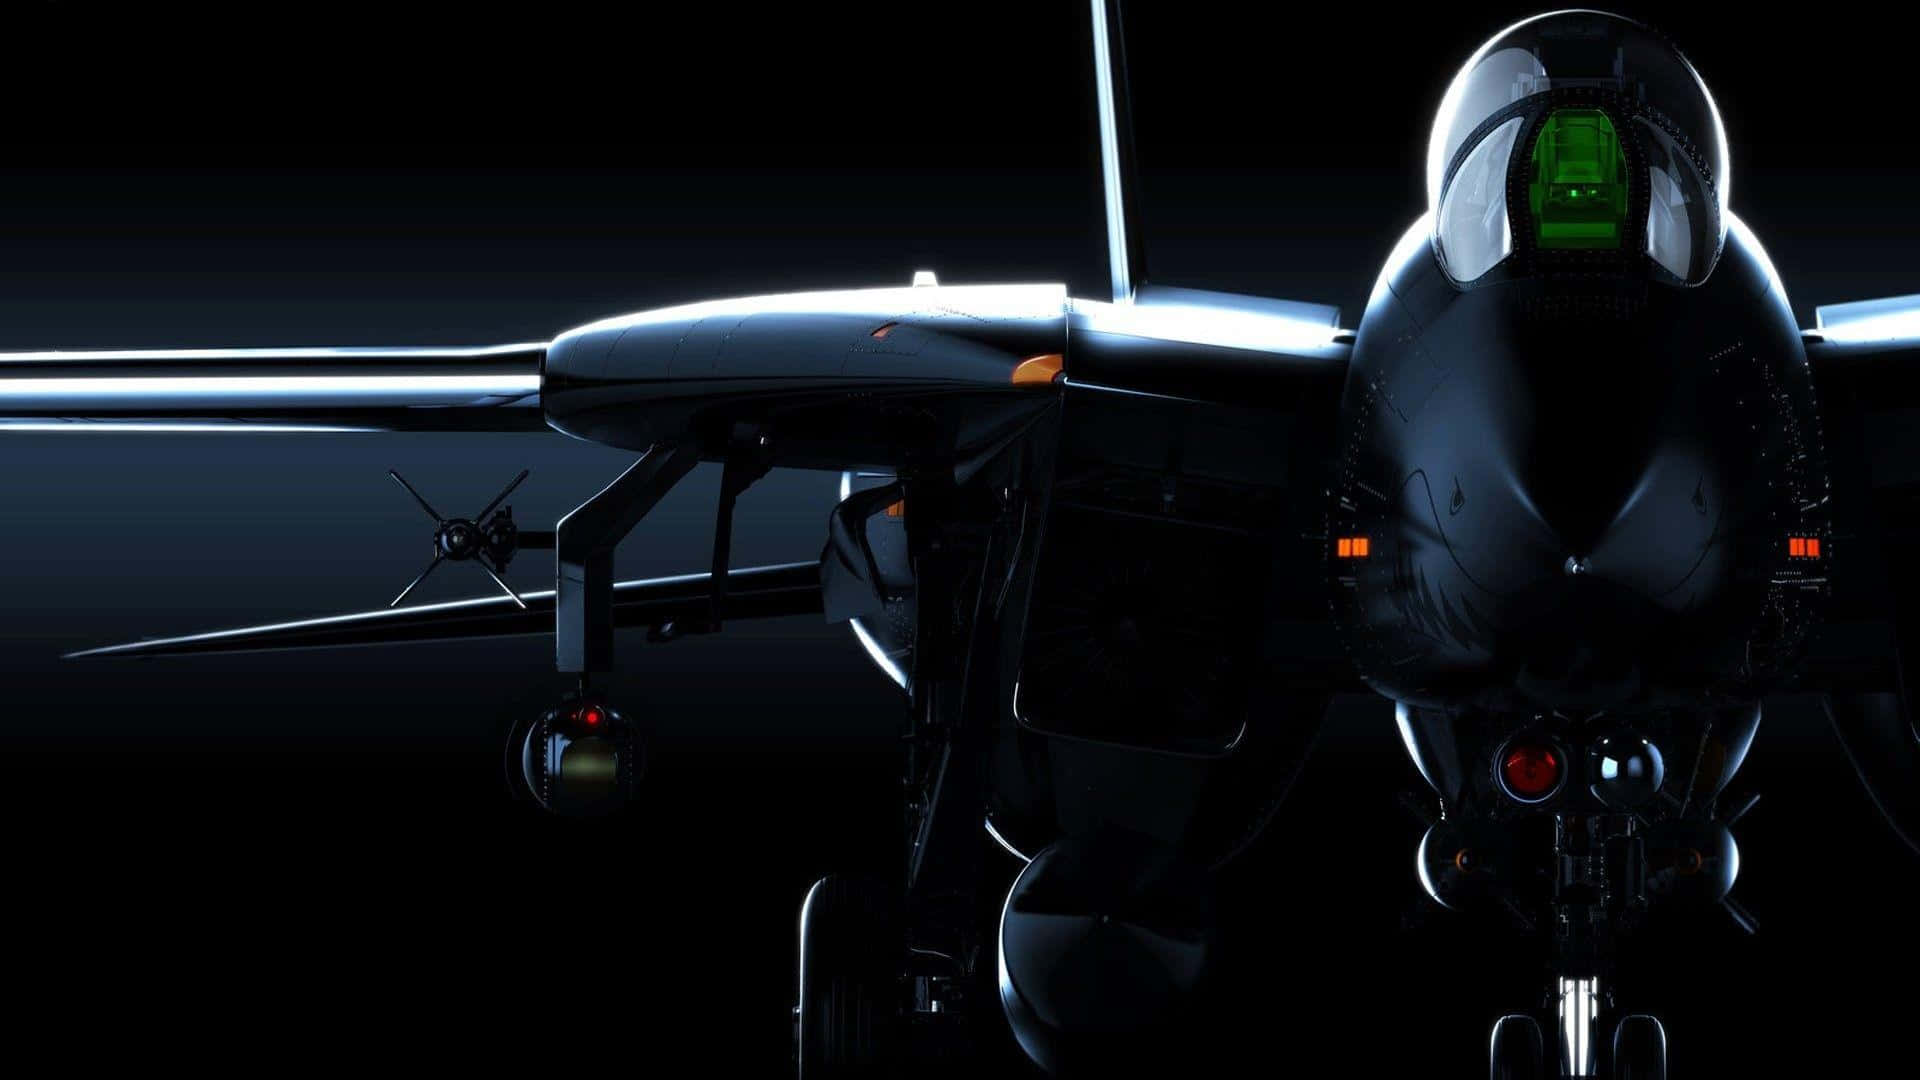 F14 Fighter Jet Silhouette Against Dark Background Wallpaper